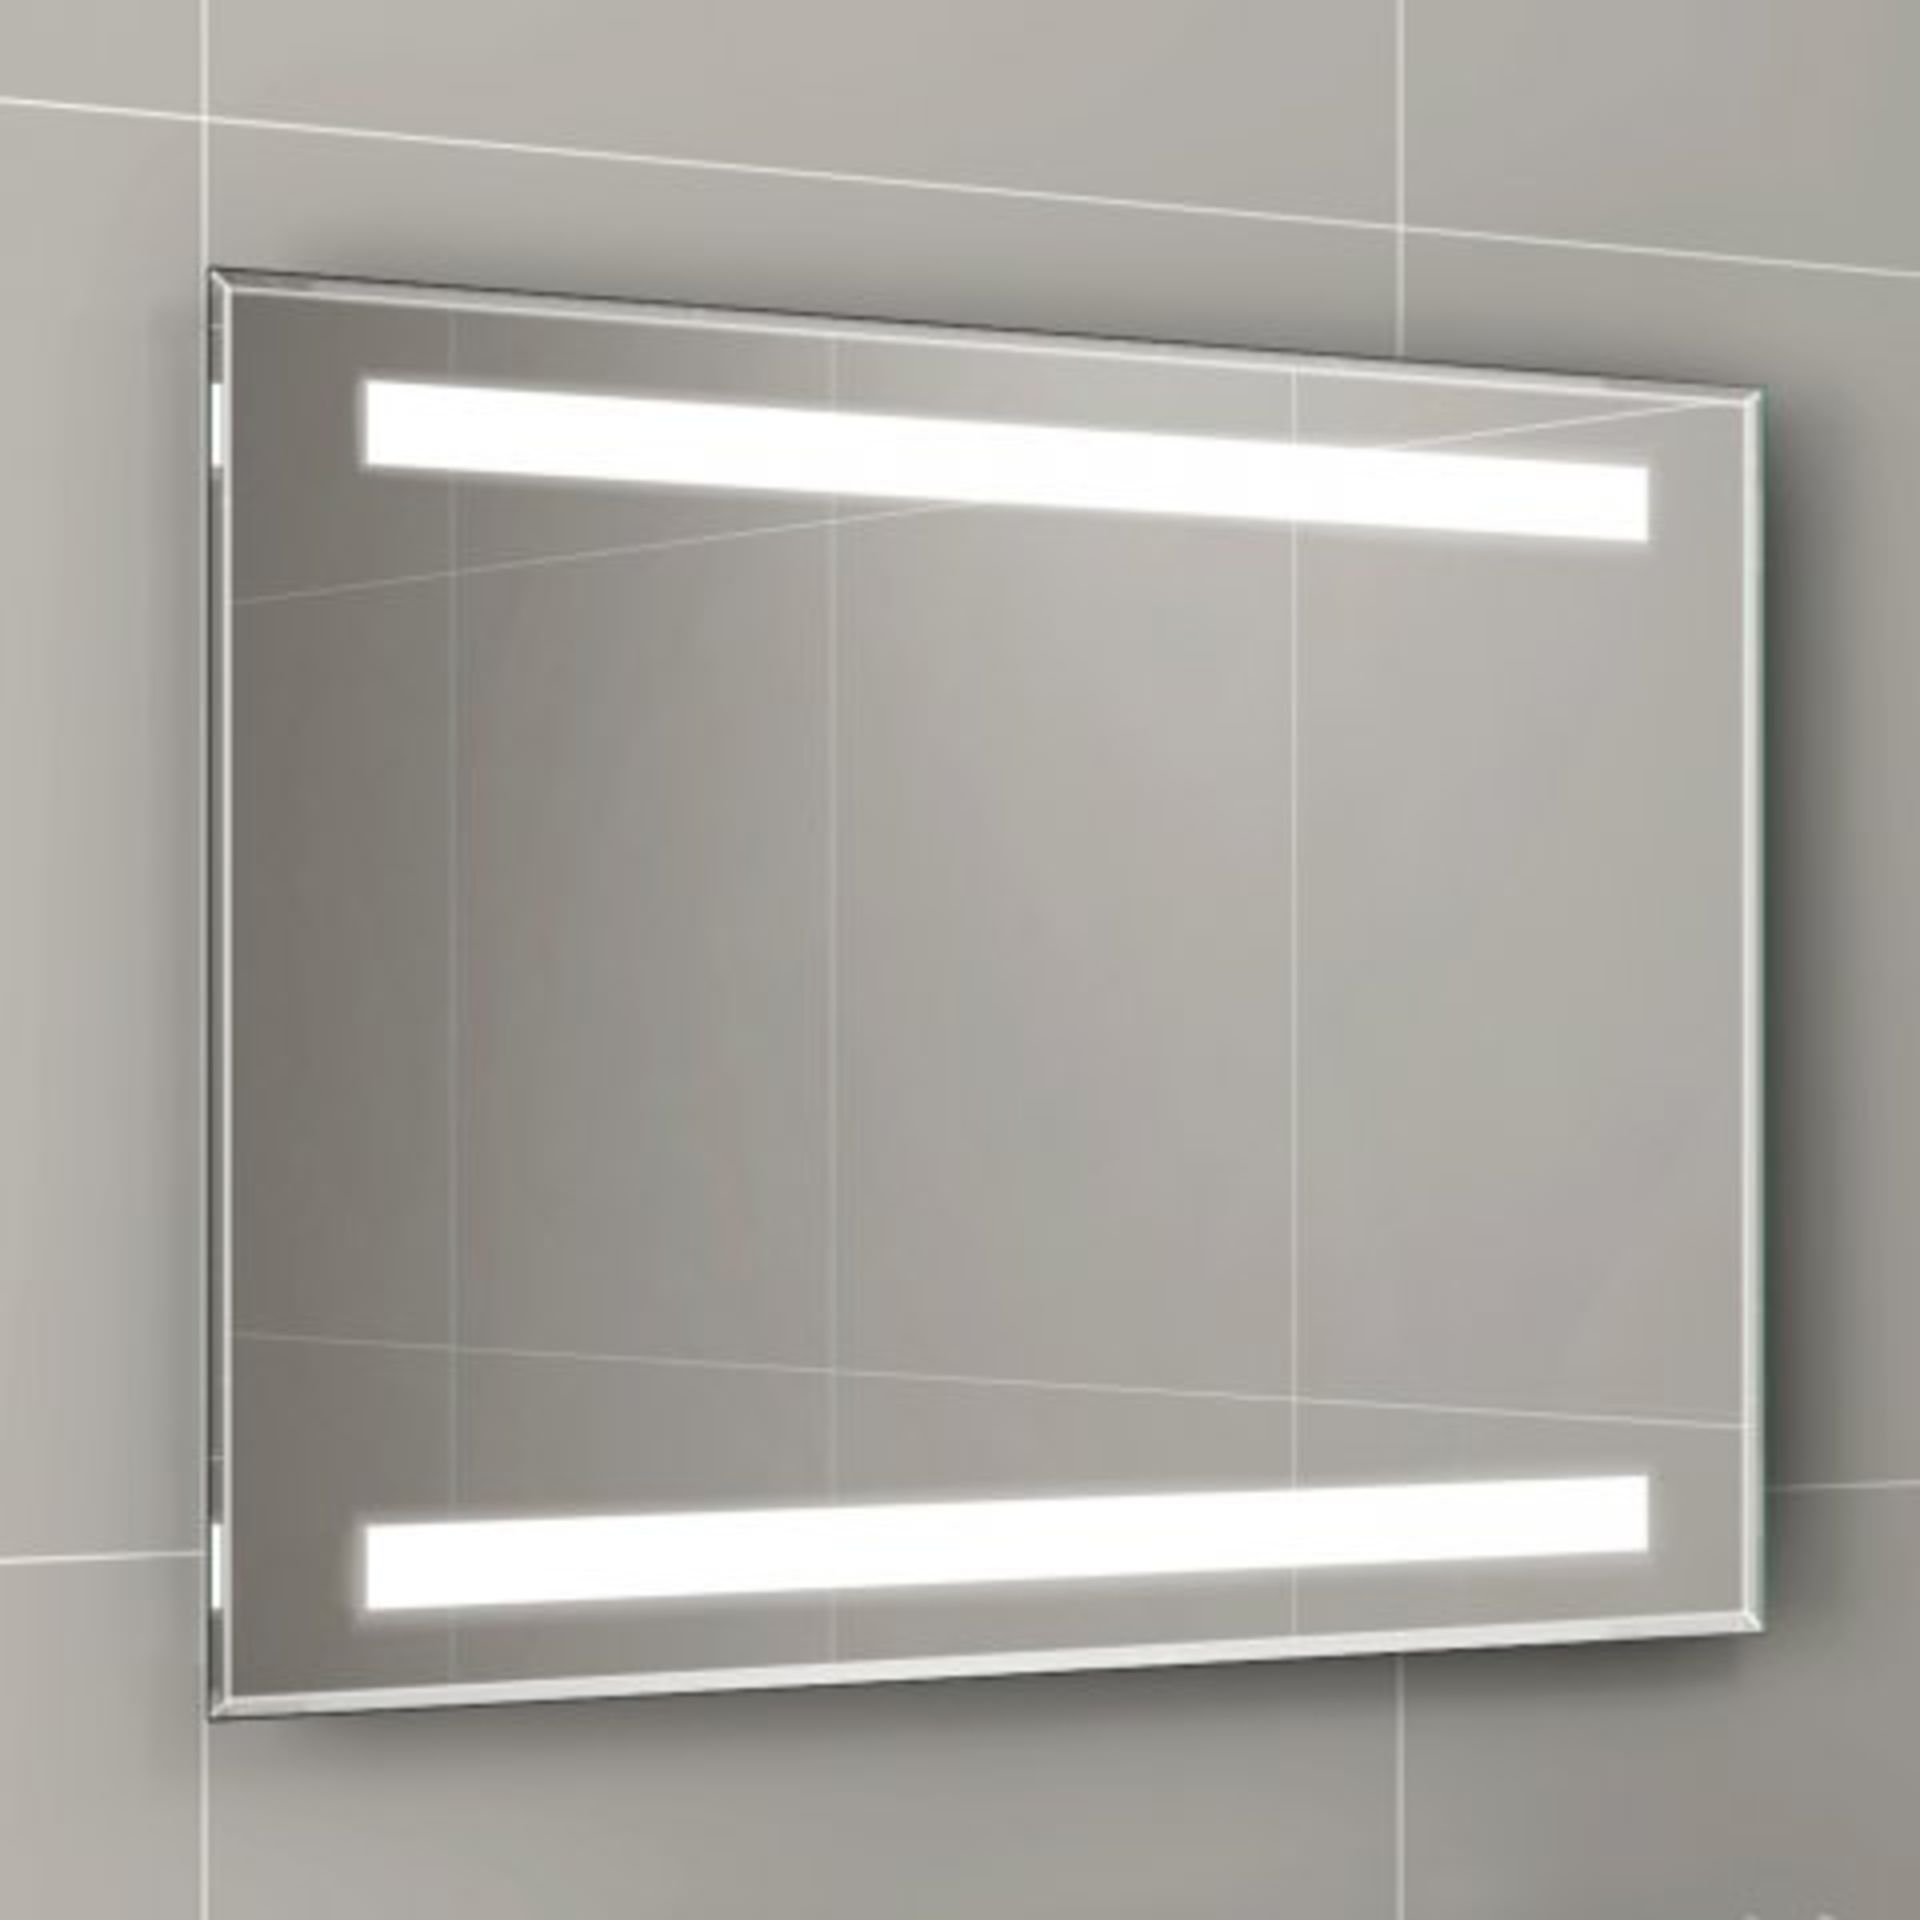 (T52) 600x800mm Omega Illuminated LED Mirror RRP £349.99 LED Power The LED gives instant - Image 2 of 4